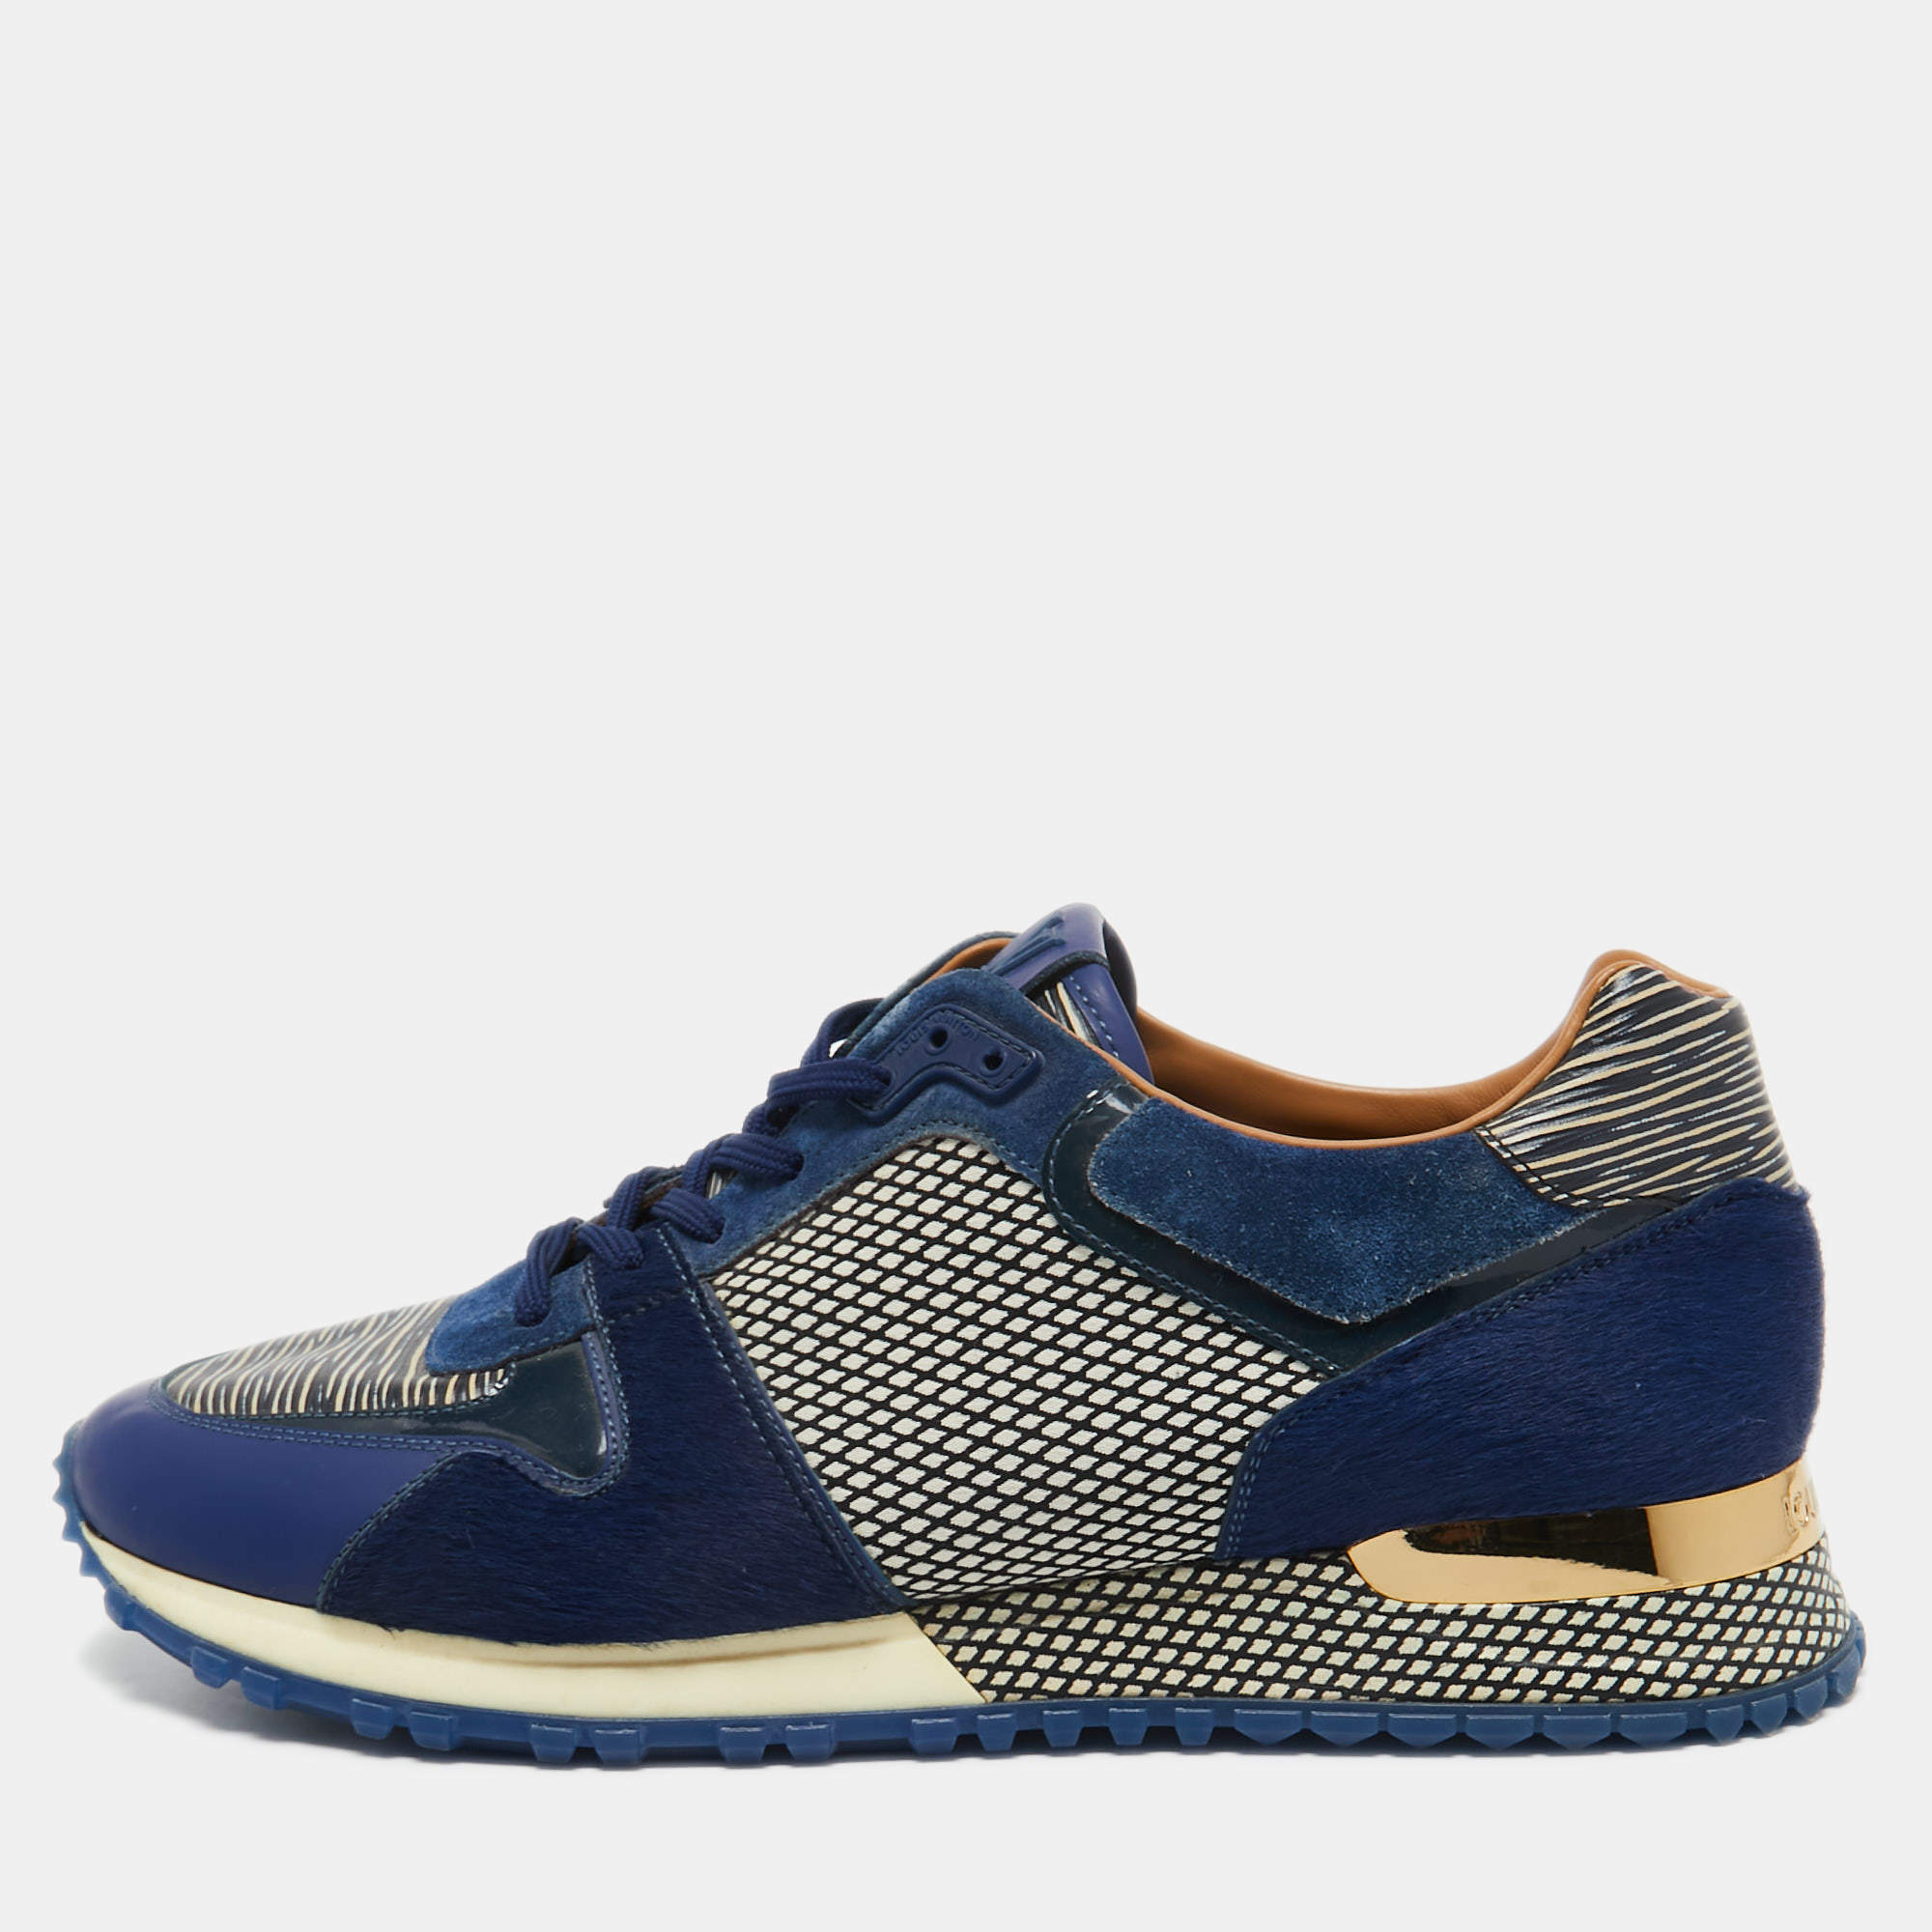 Louis Vuitton Run 55 Sneaker Grey. Size 35.5